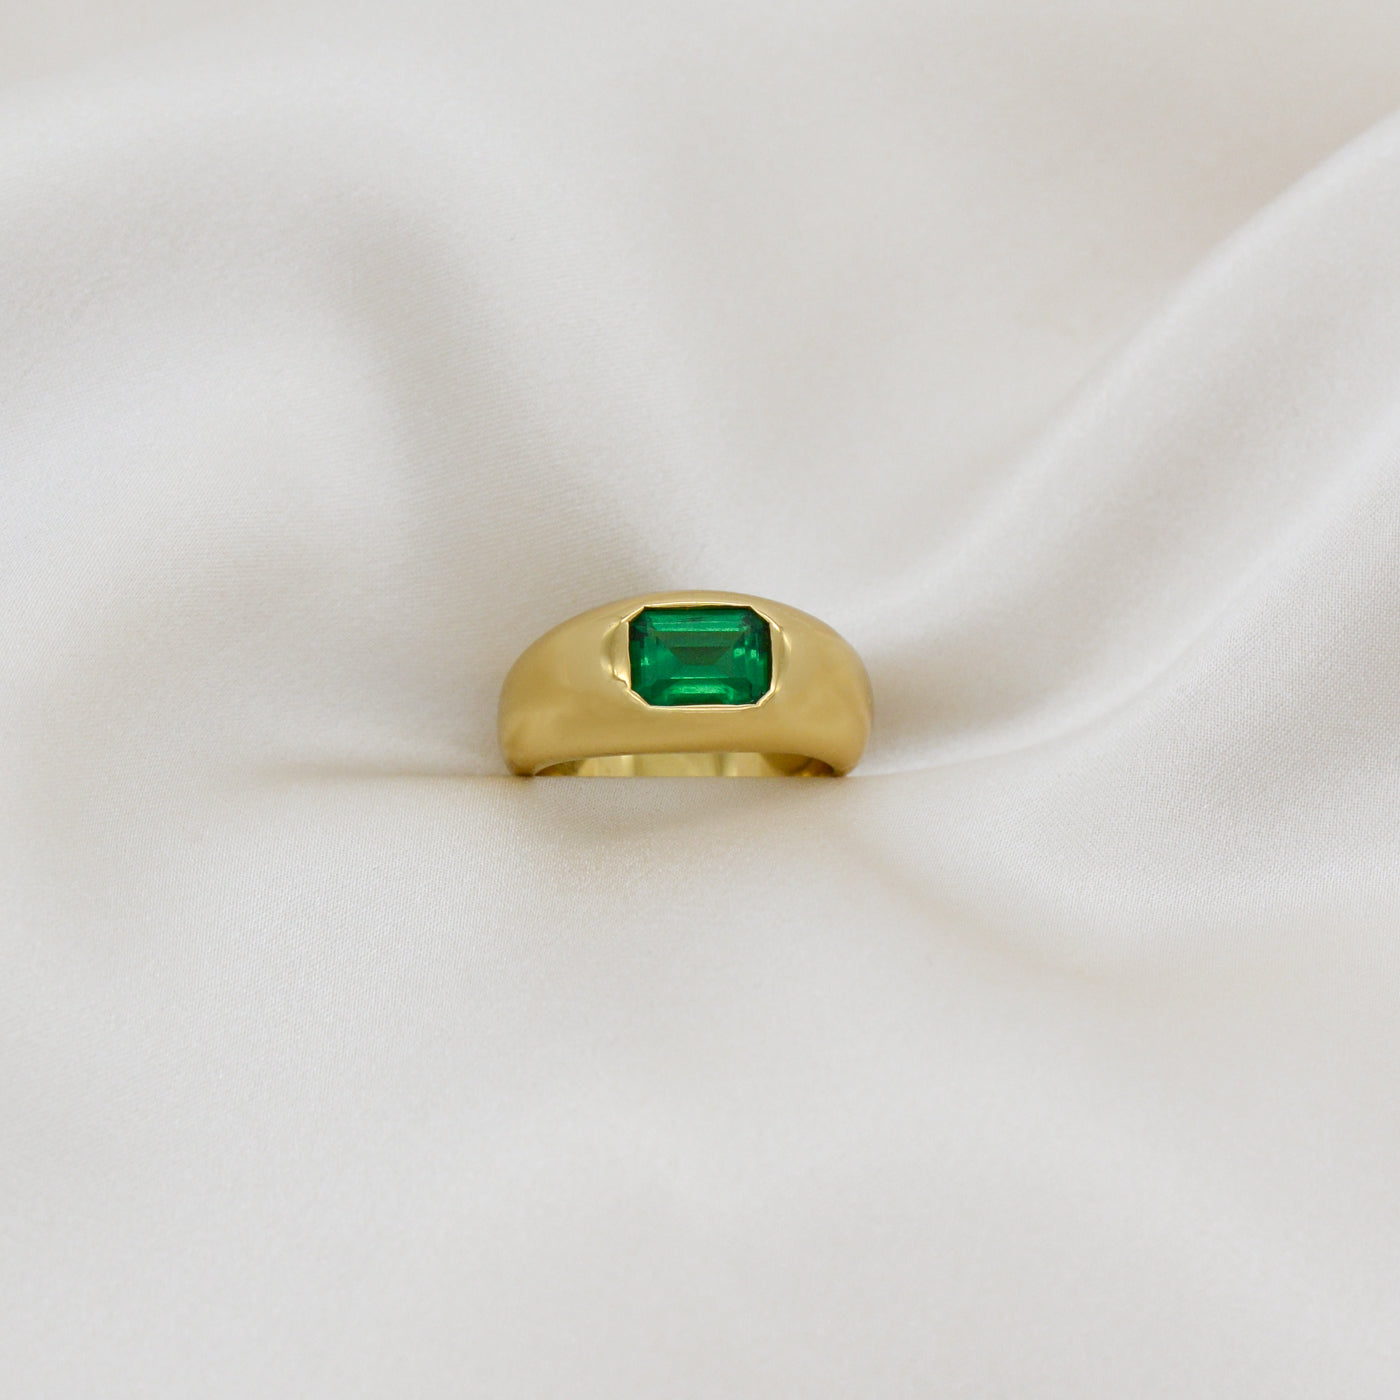 AU79 Vienna Ring w/ Emerald CZ